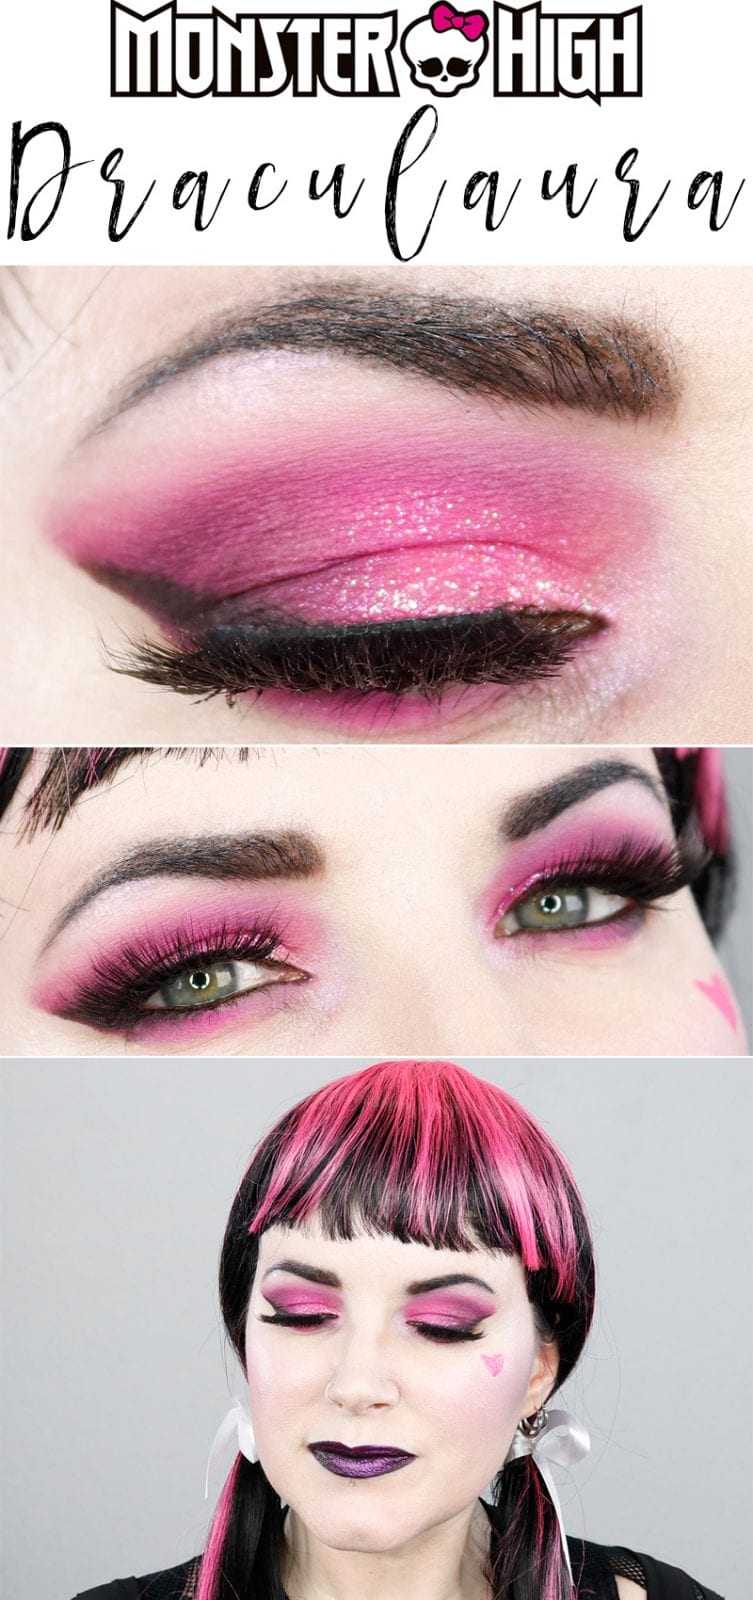 Monster High Draculaura Makeup Tutorial - Hot Pink and Black makeup tutorial with Kat Von D, Sugarpill, Urban Decay and Makeup Geek. #MonsterHigh #Draculaura #halloween